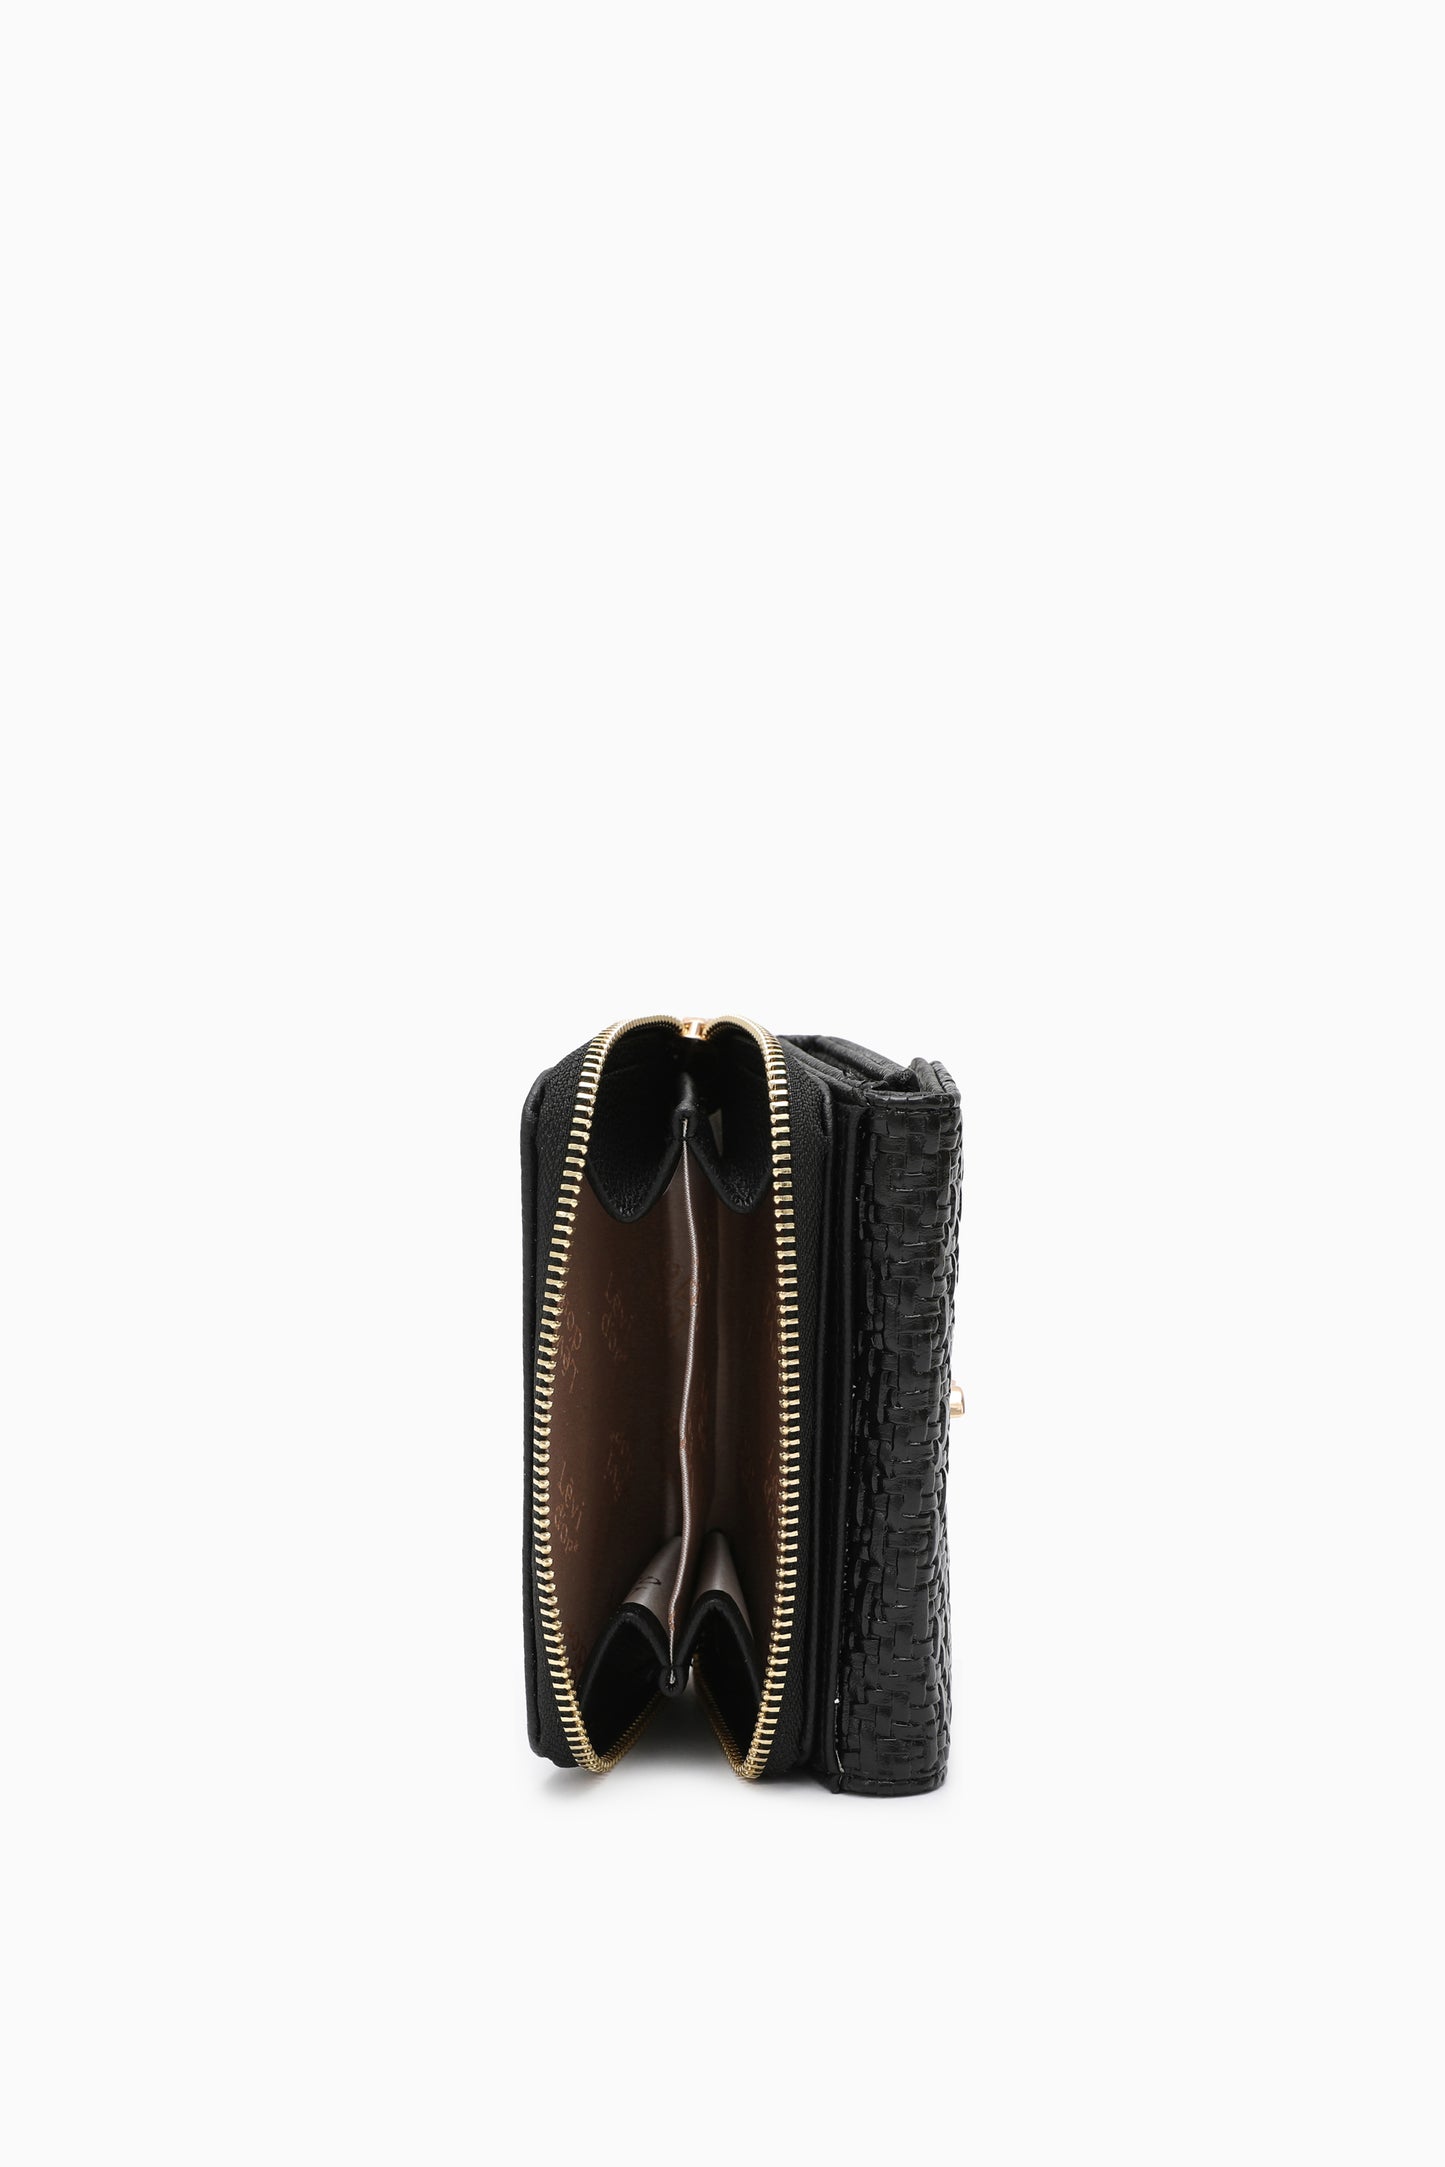 Card wallet -21075- Black - bakkaclothing